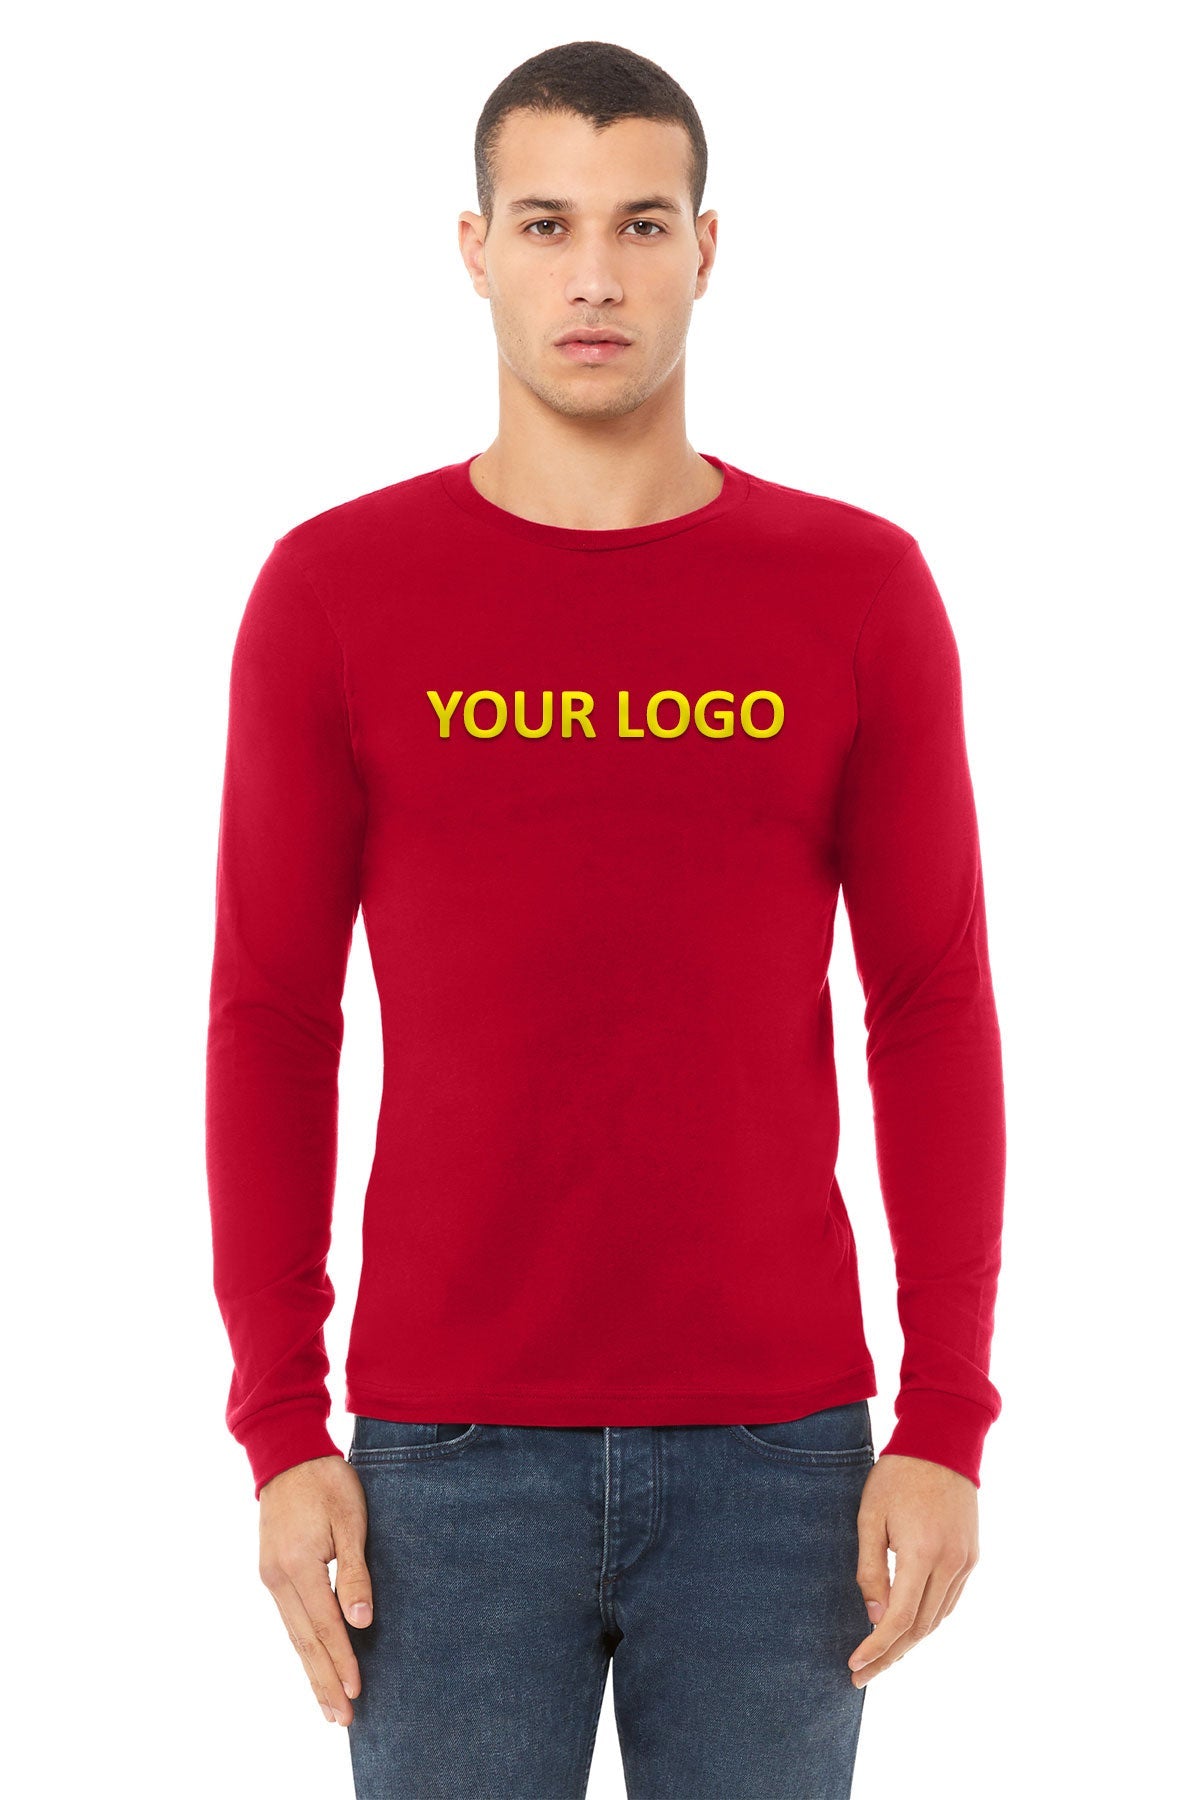 bella + canvas unisex jersey long sleeve t-shirt 3501 red